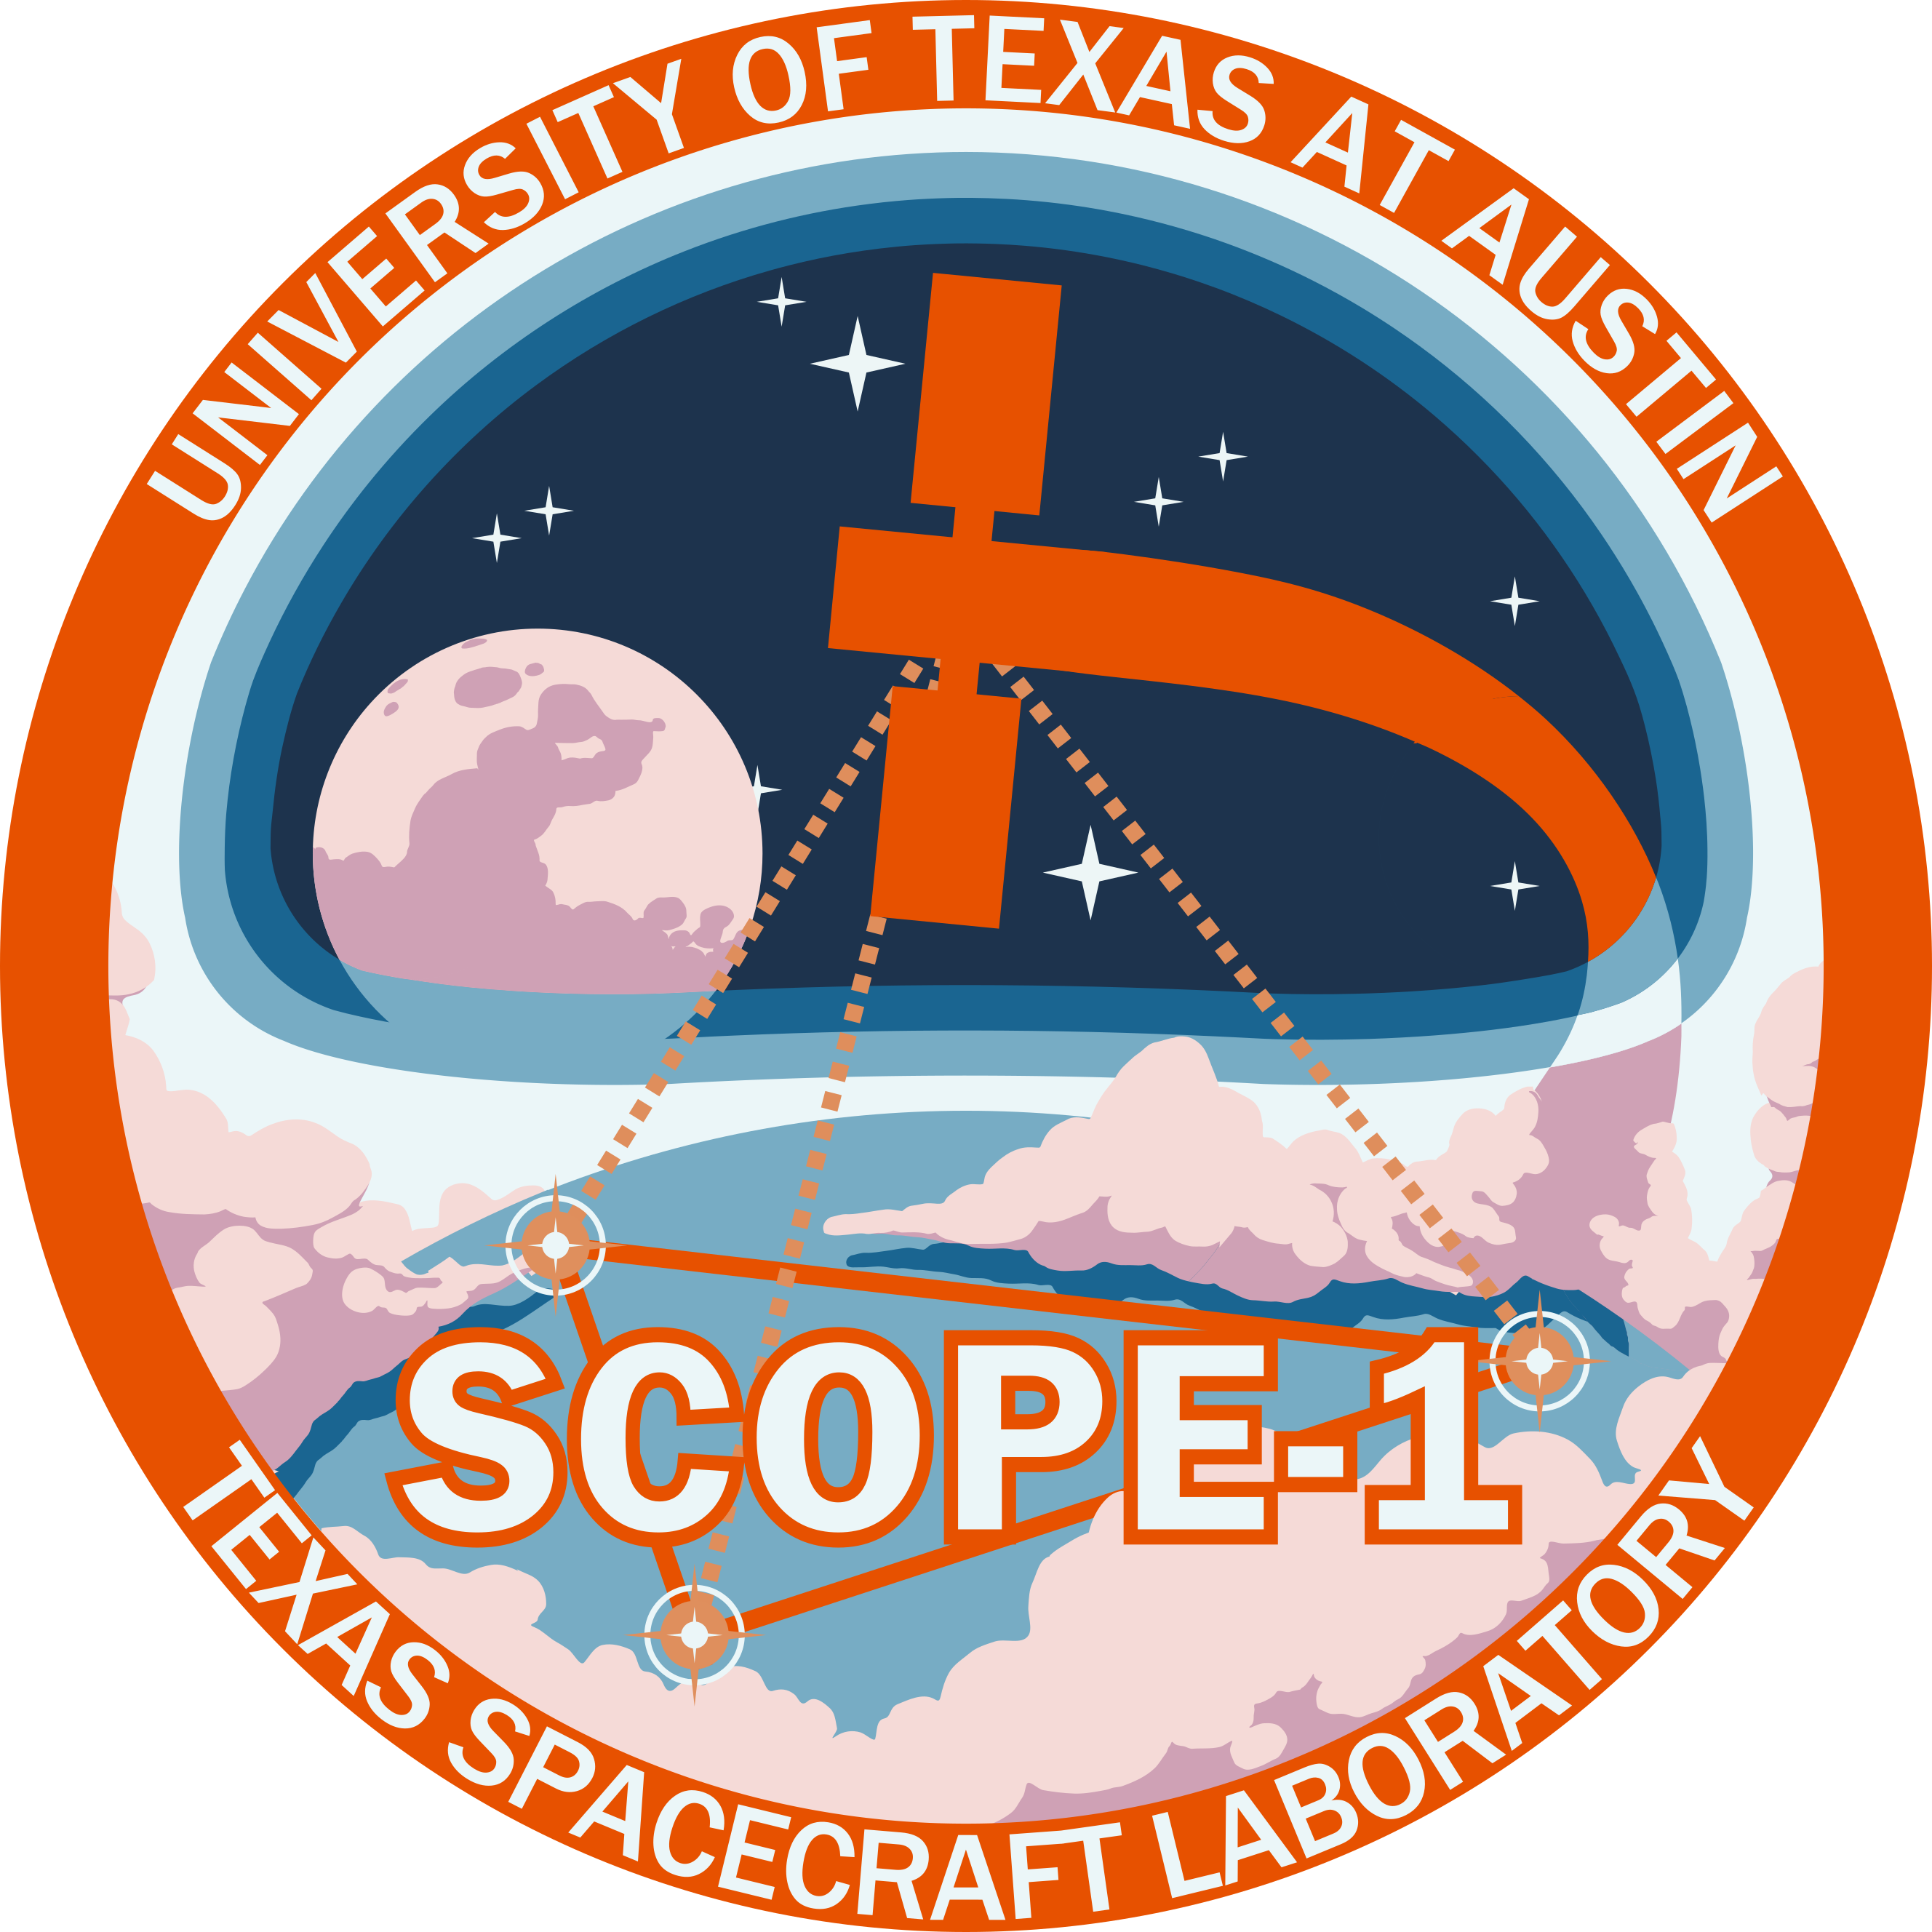 UT Austin Texas Spacecraft Laboratory logo